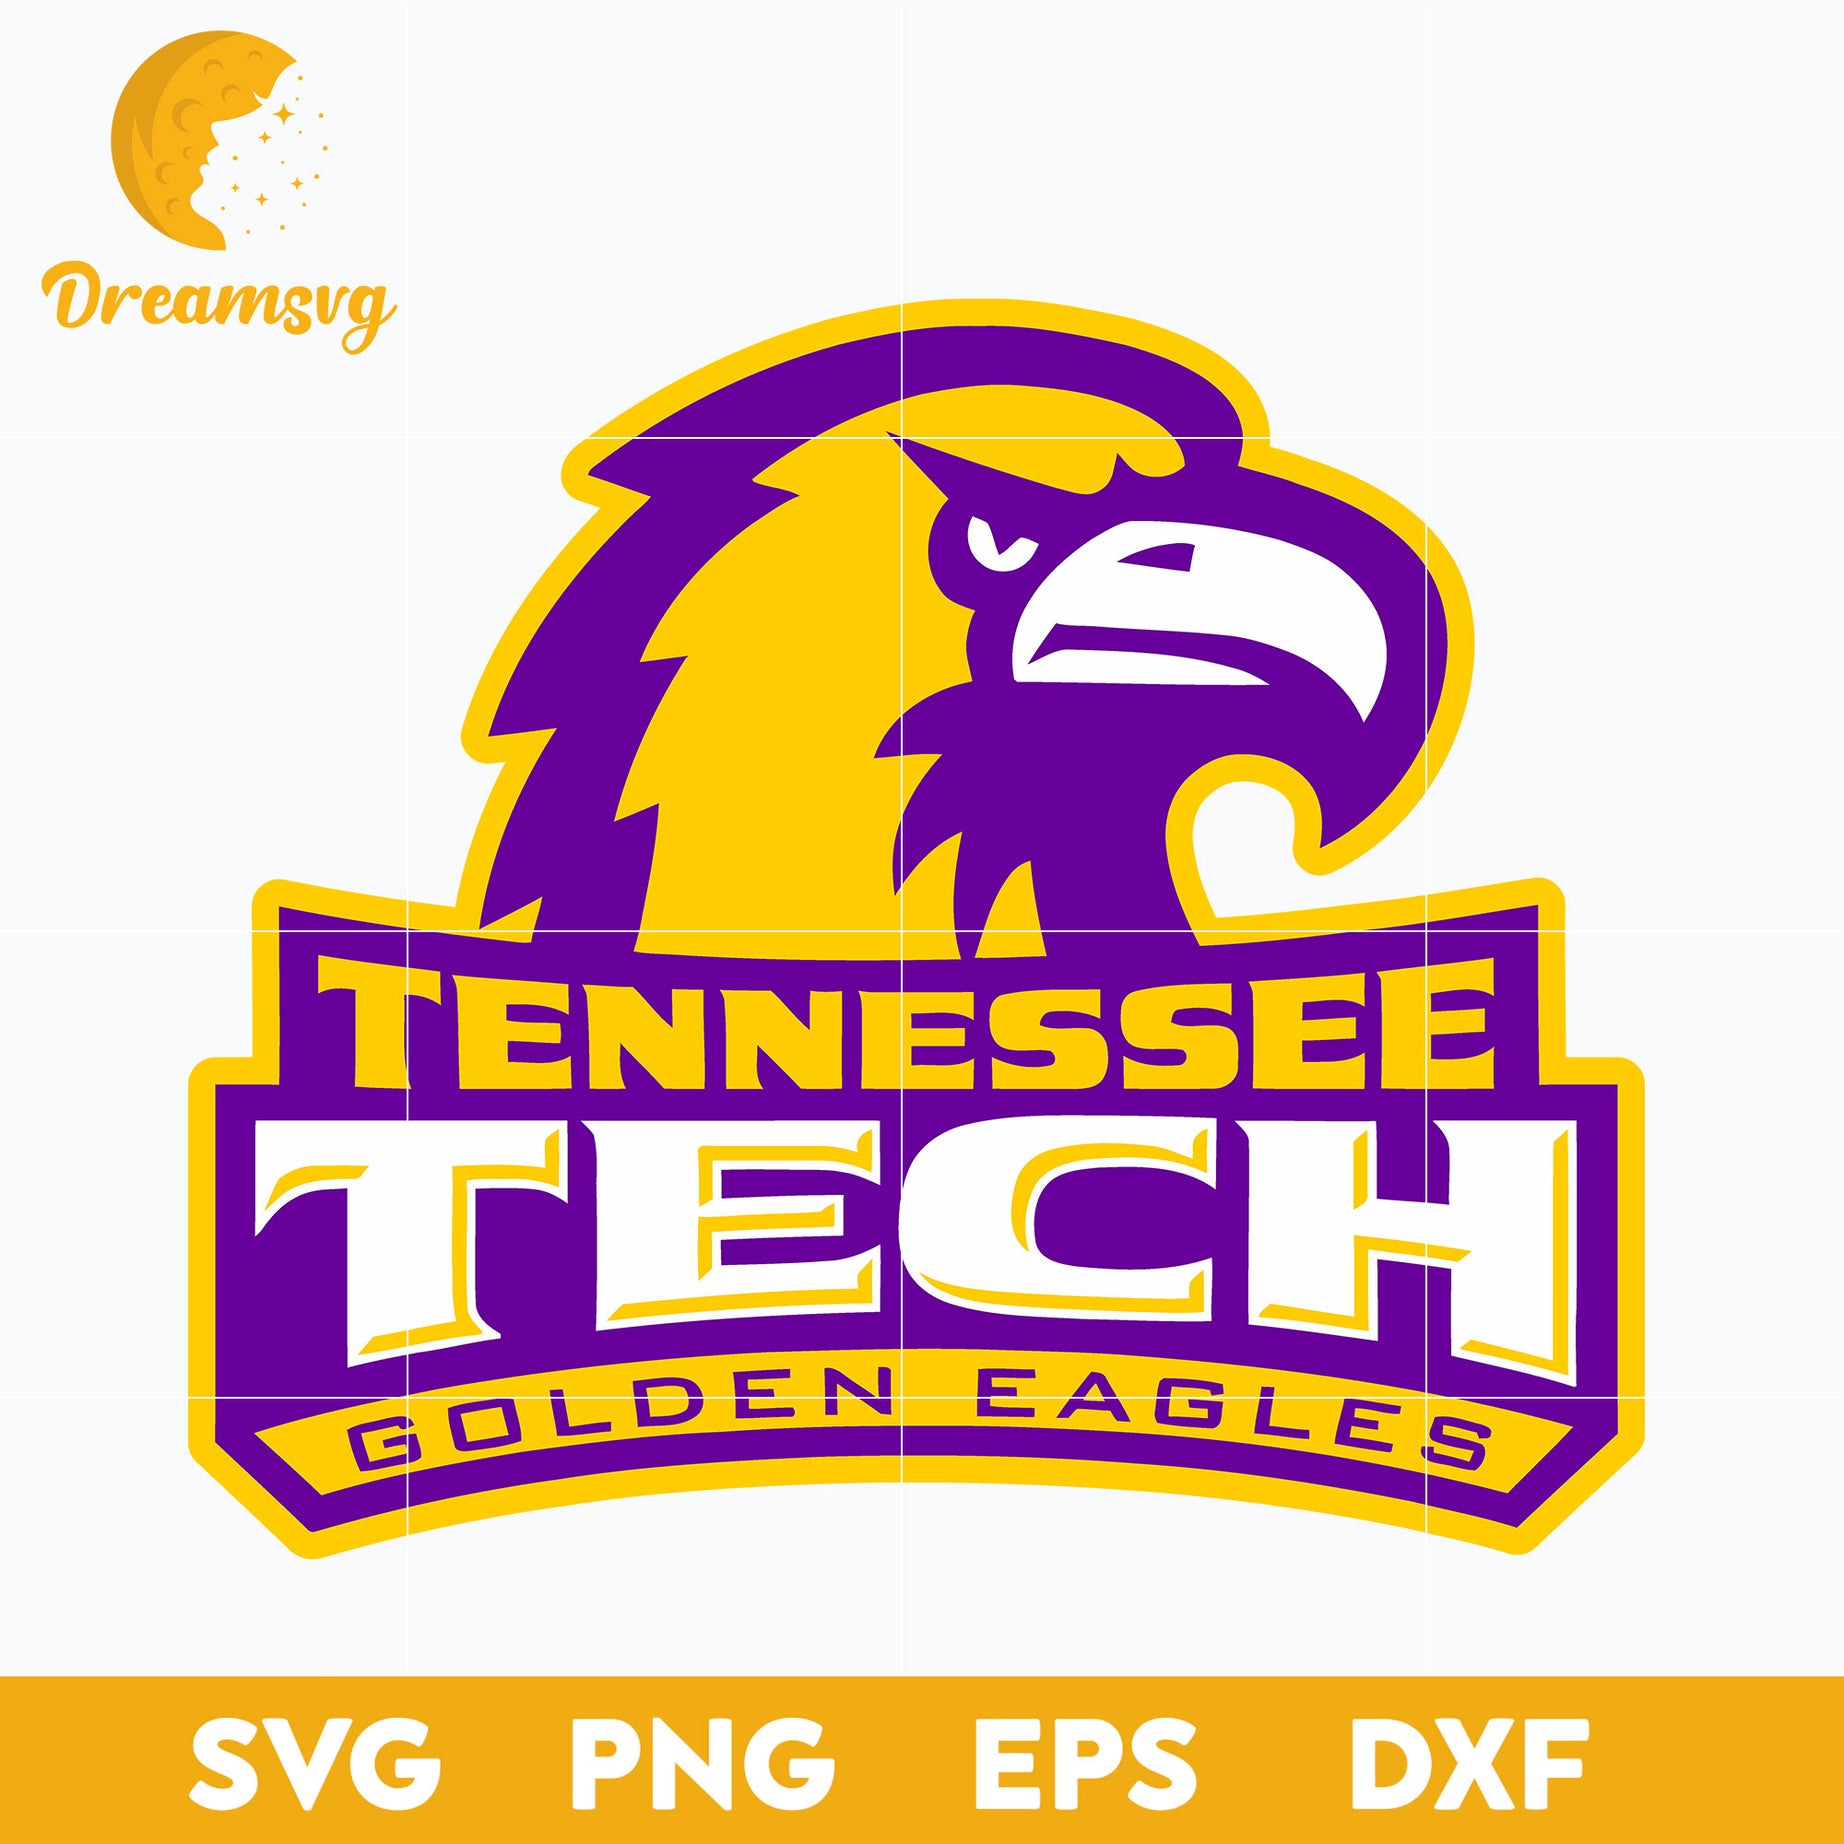 Tennessee Tech Golden Eagles Svg, Logo Ncaa Sport Svg, Ncaa Svg, Png, Dxf, Eps Download File.